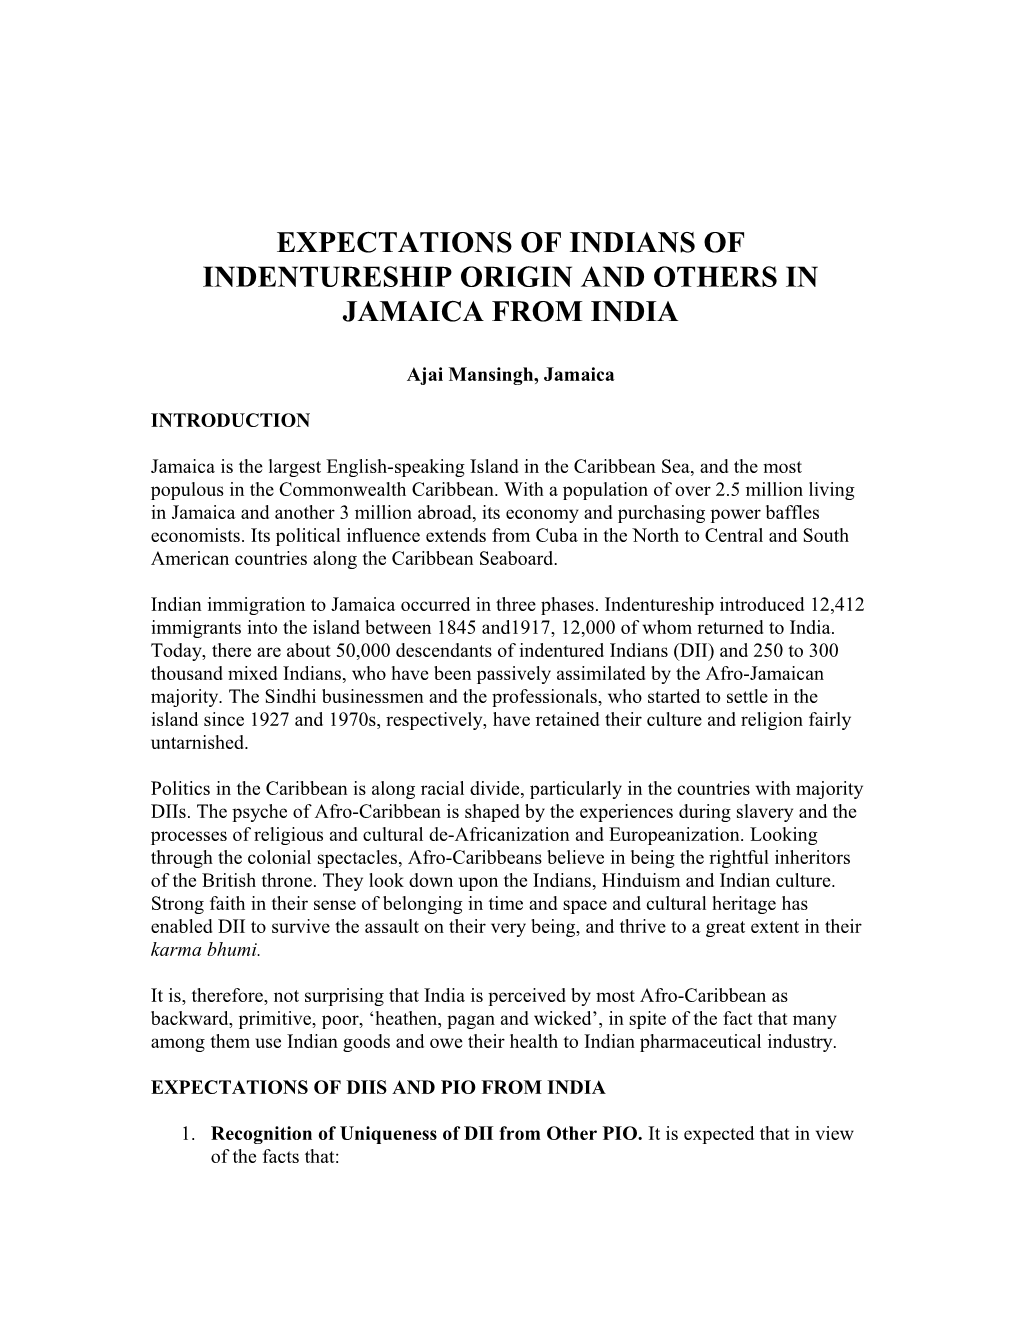 Expectations of Indians of Indentureship Origin and Indian Origin in Jamaica from India